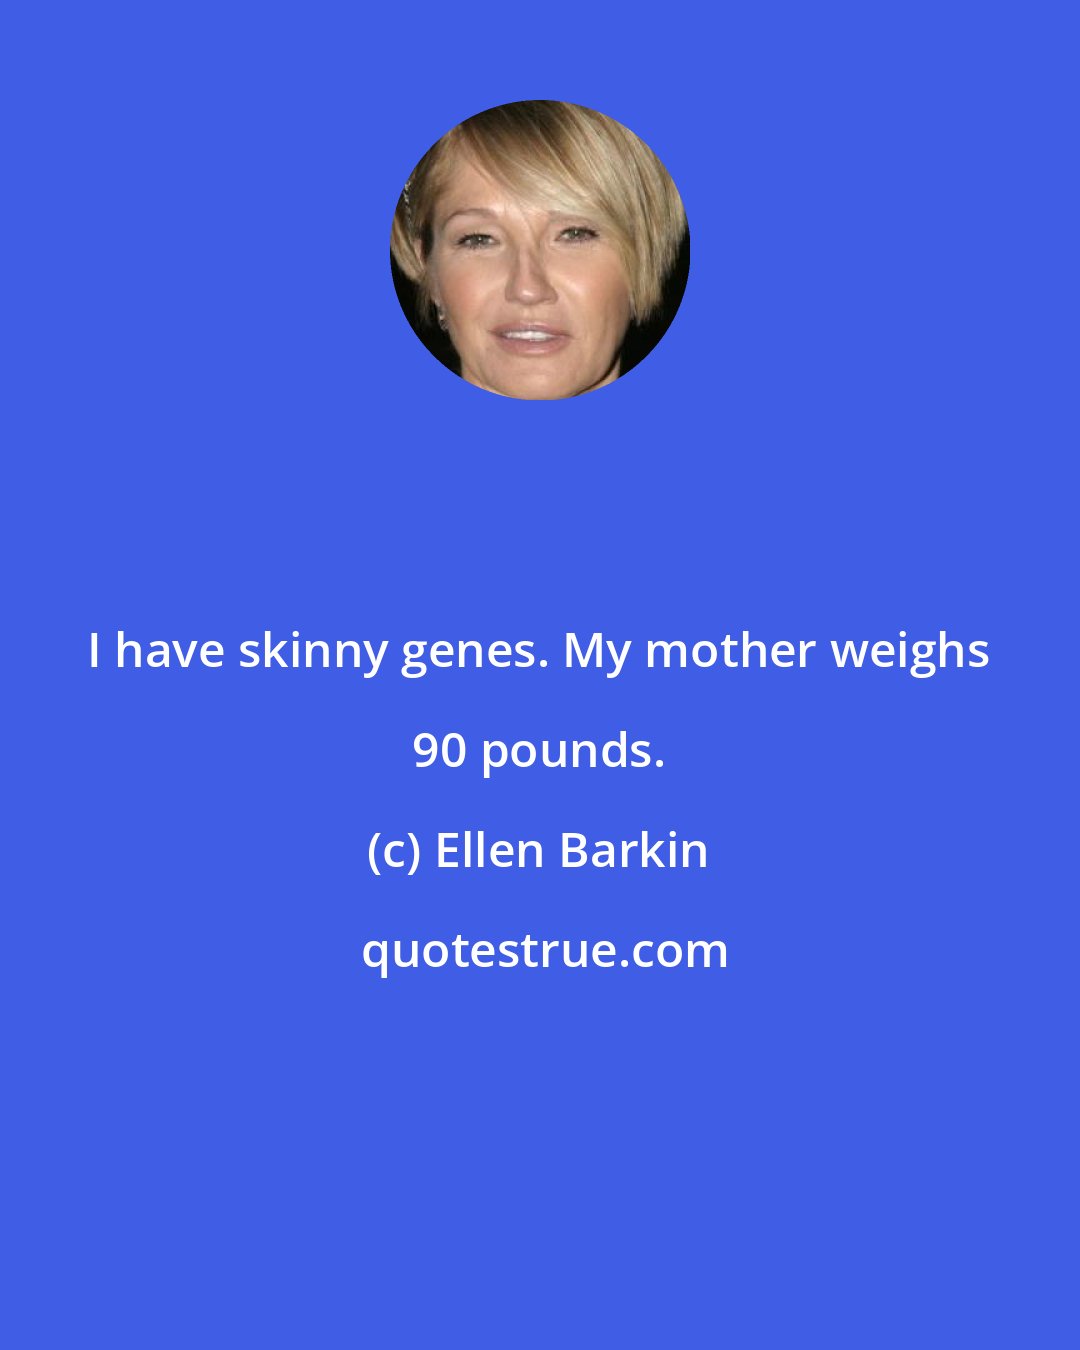 Ellen Barkin: I have skinny genes. My mother weighs 90 pounds.